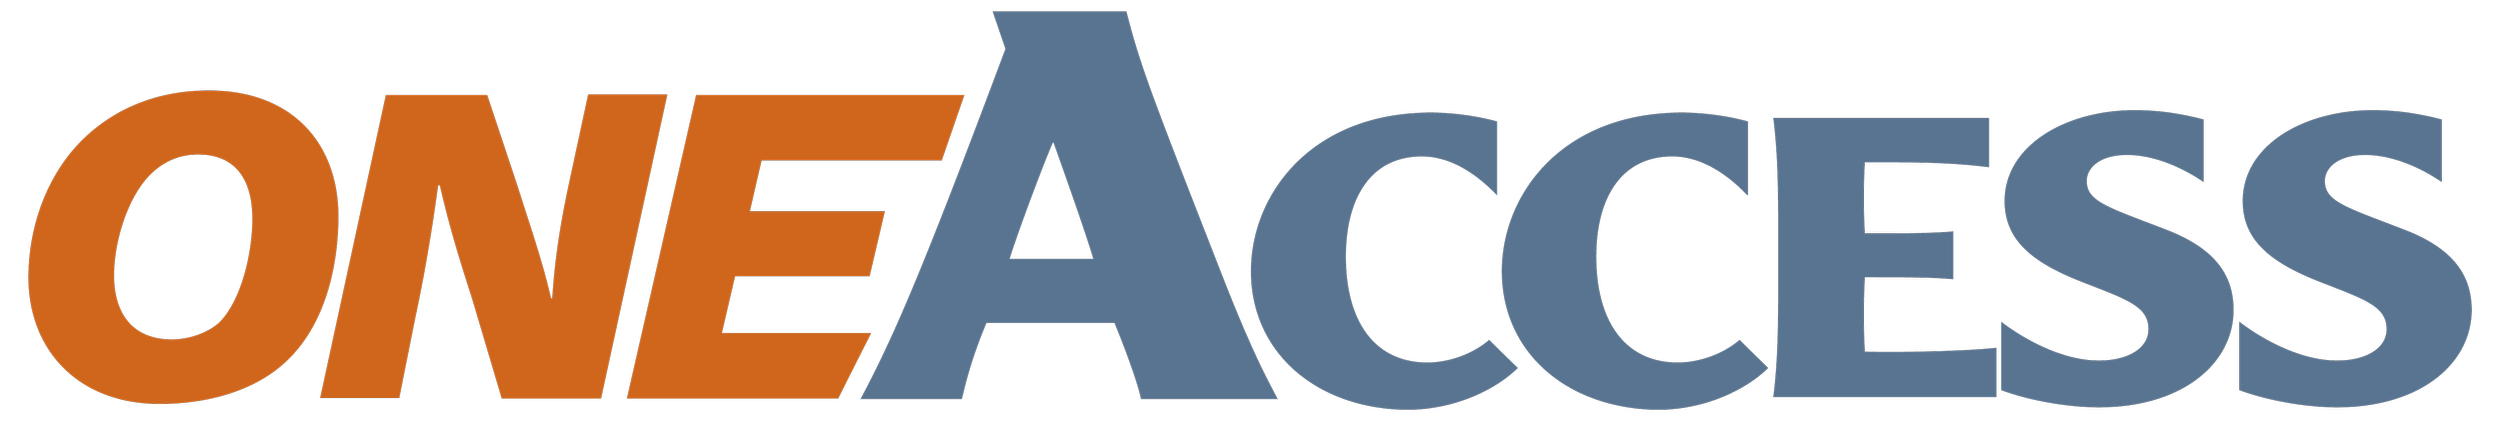 ONE ACCESS logo